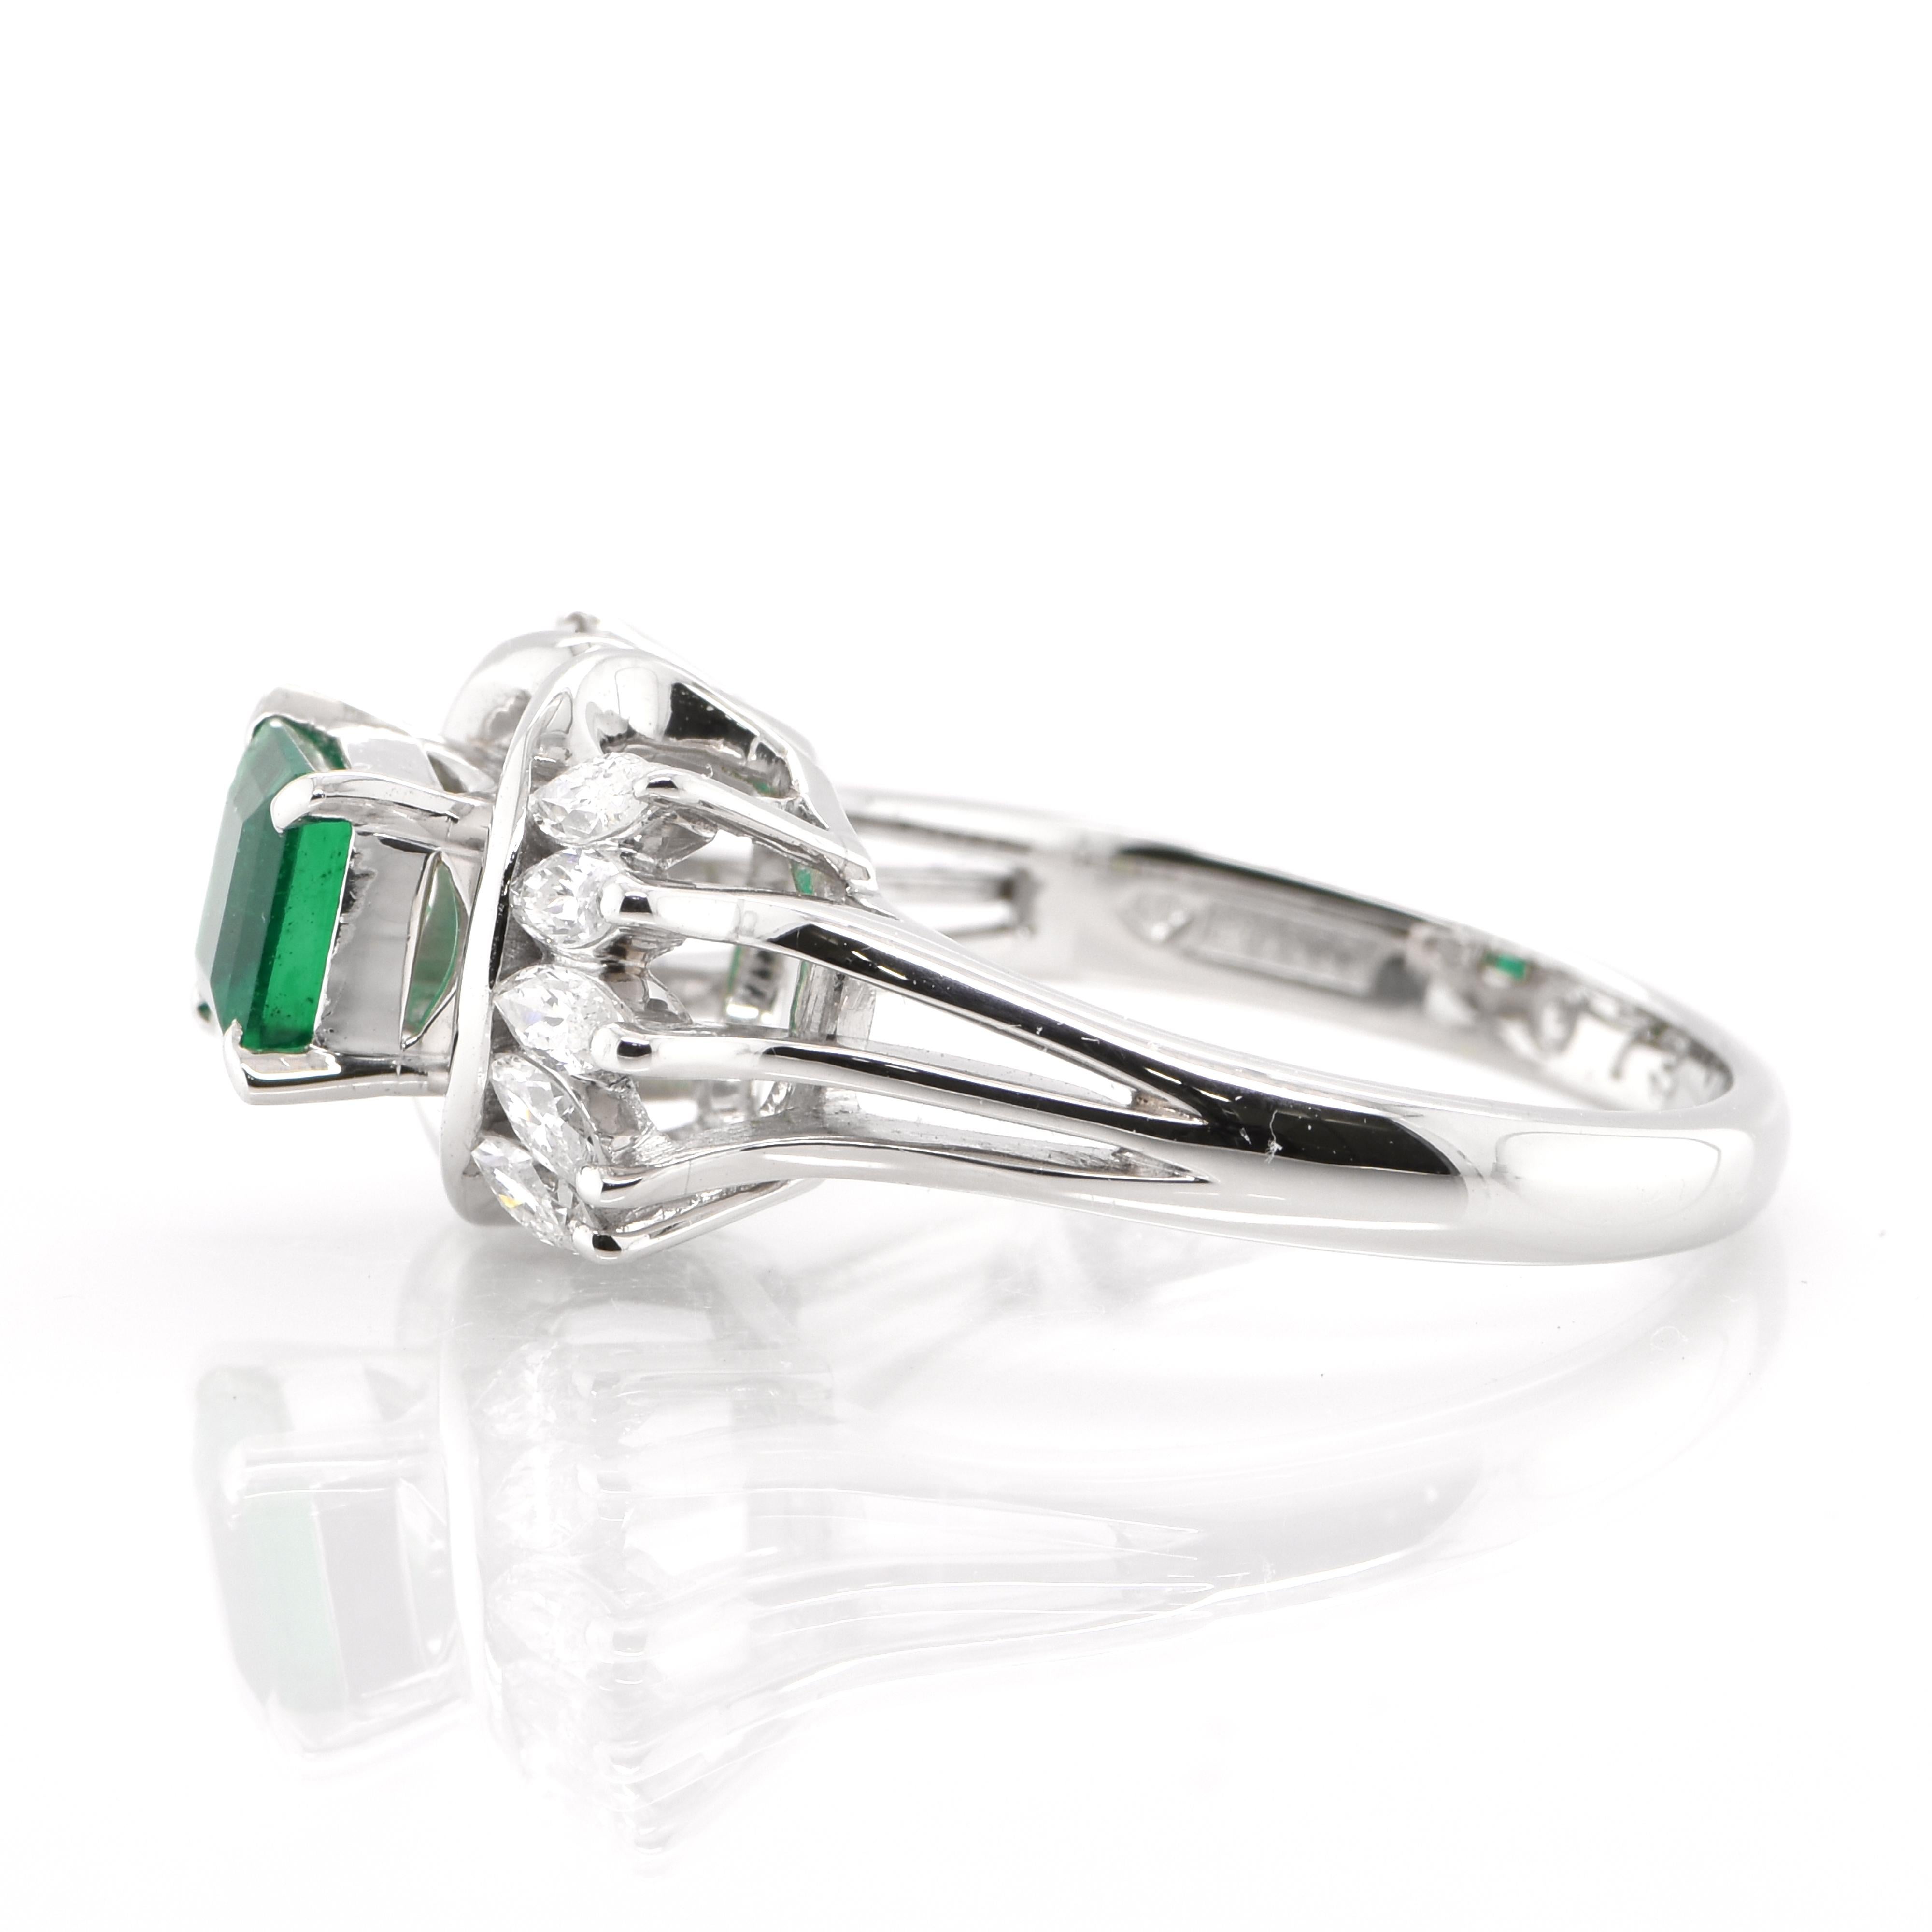 Emerald Cut 0.73 Carat Natural Emerald and Diamond Cocktail Ring Set in Platinum